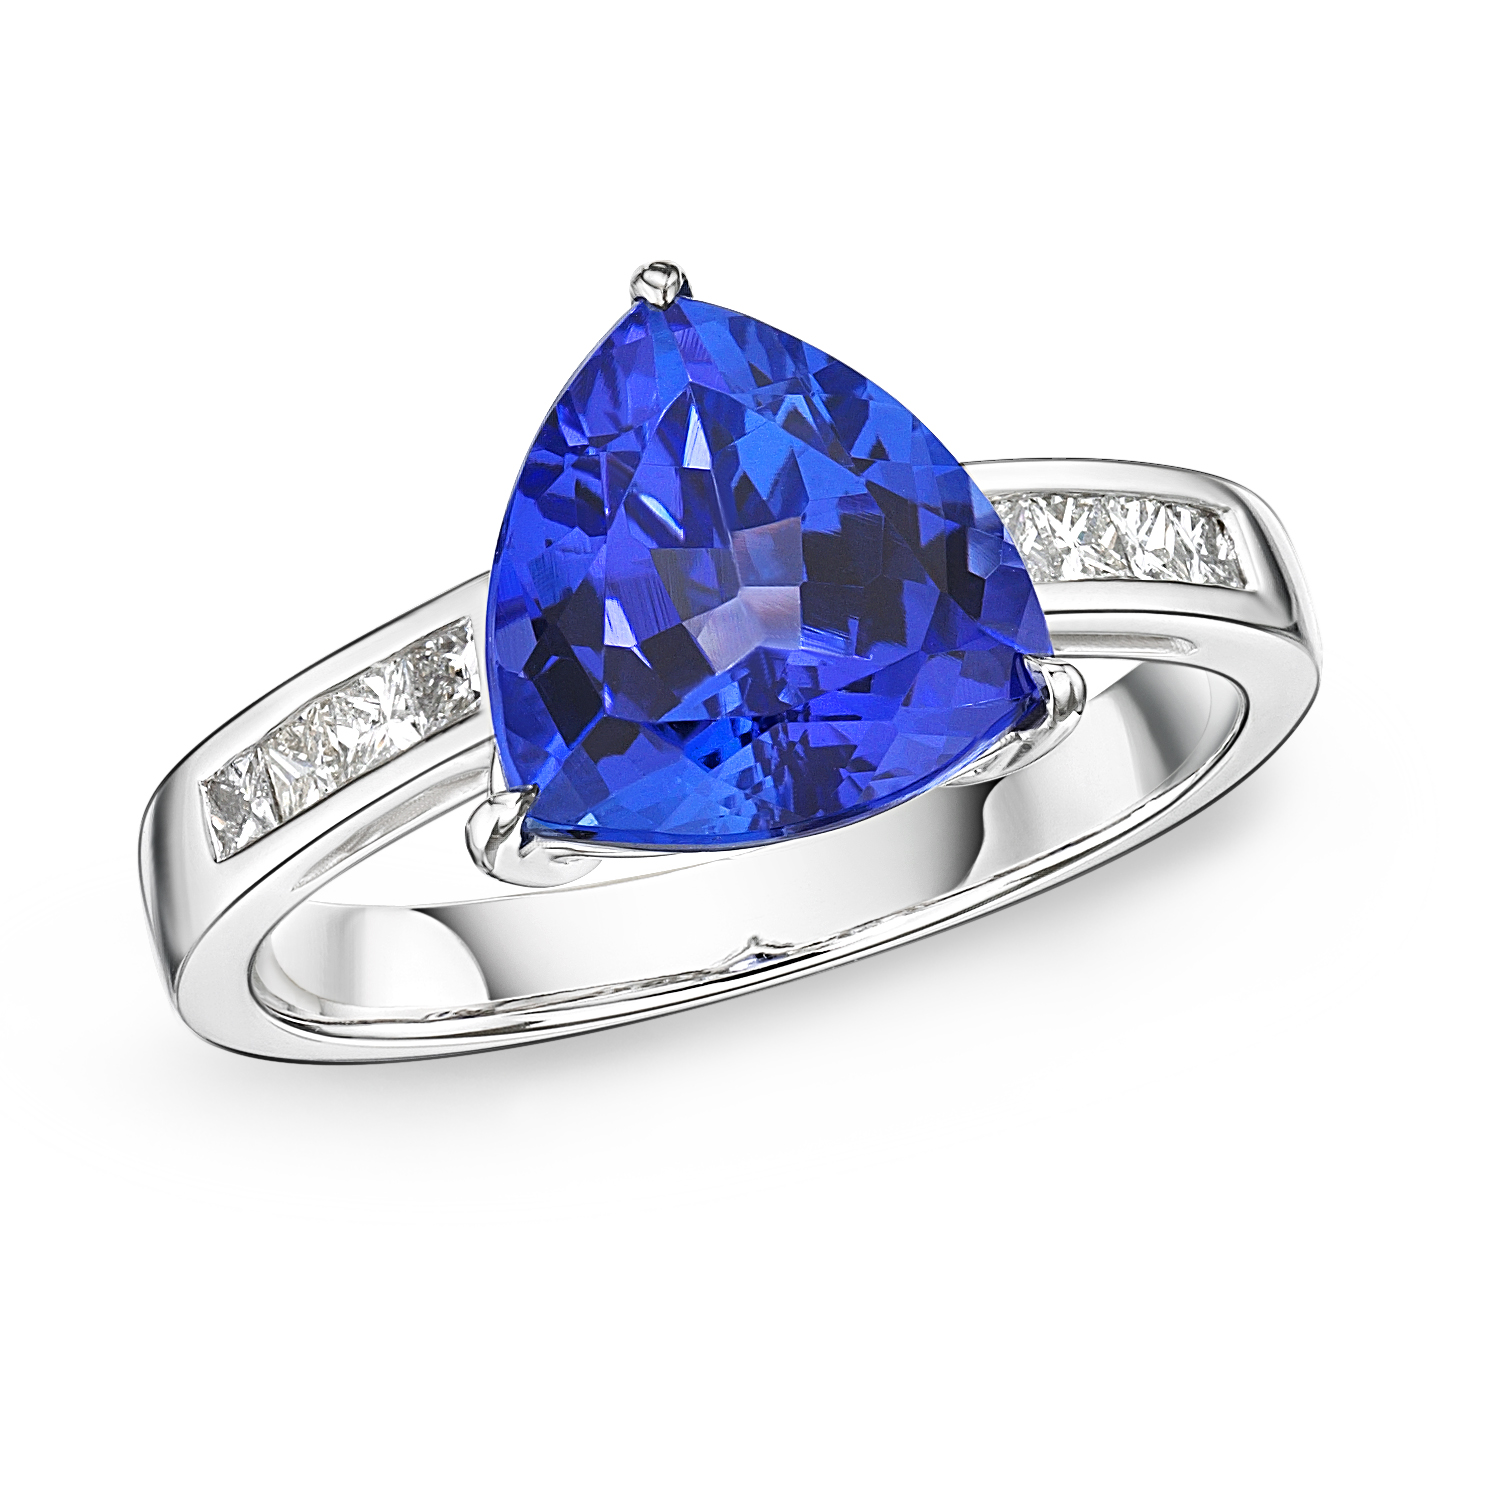 Opulent Tanzanite Ring with Diamonds and Emeralds | SCHMUCKTRAEUME.COM